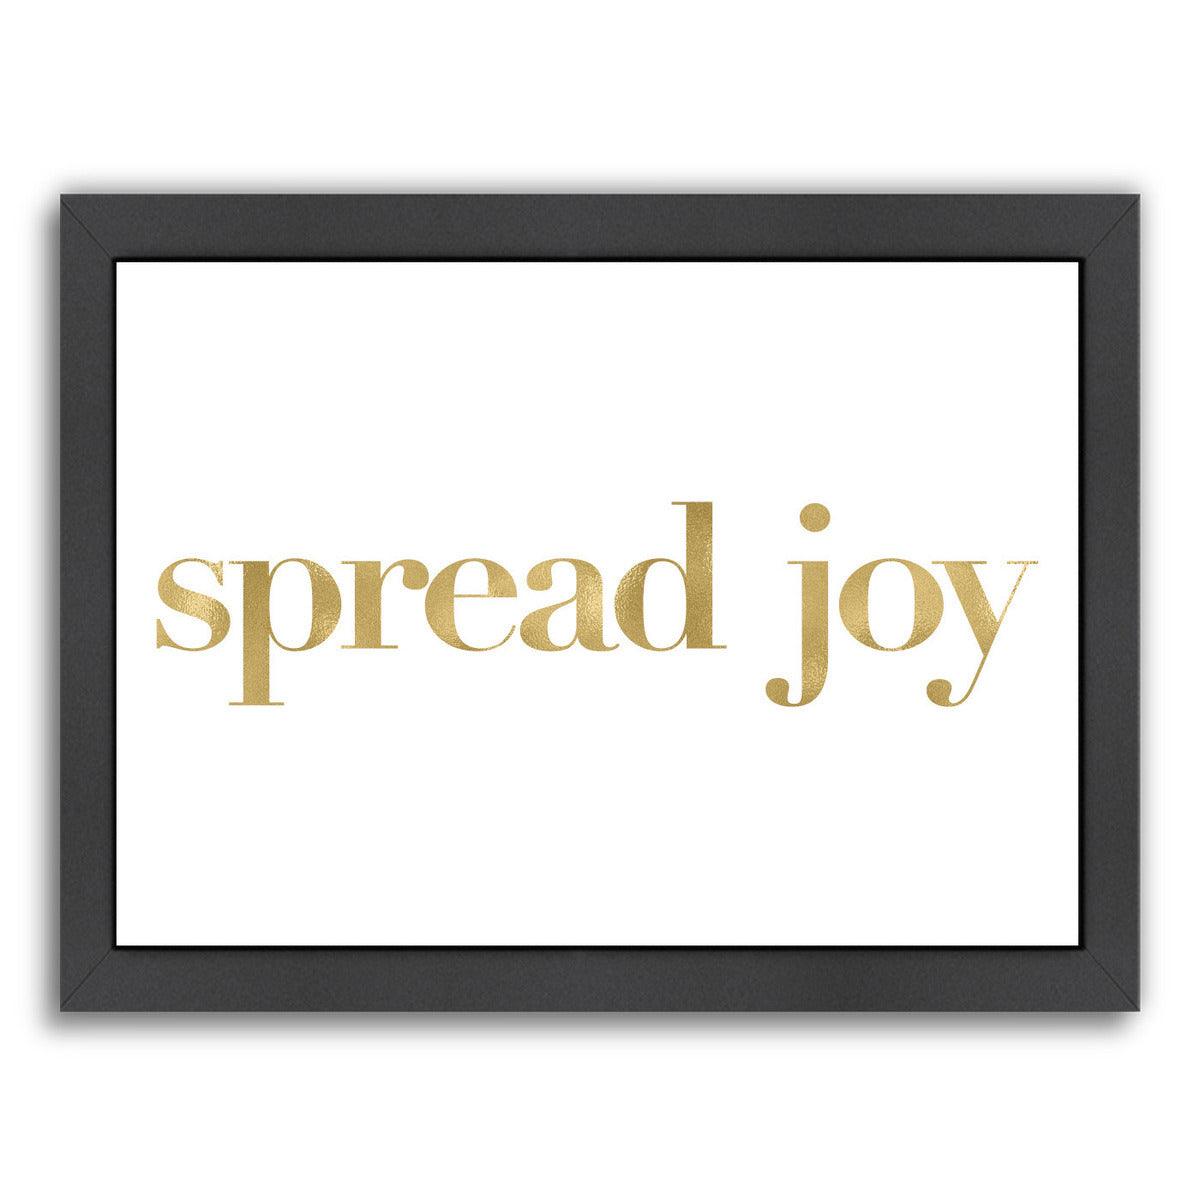 Spread Joy Gold On White by Amy Brinkman Framed Print - Americanflat